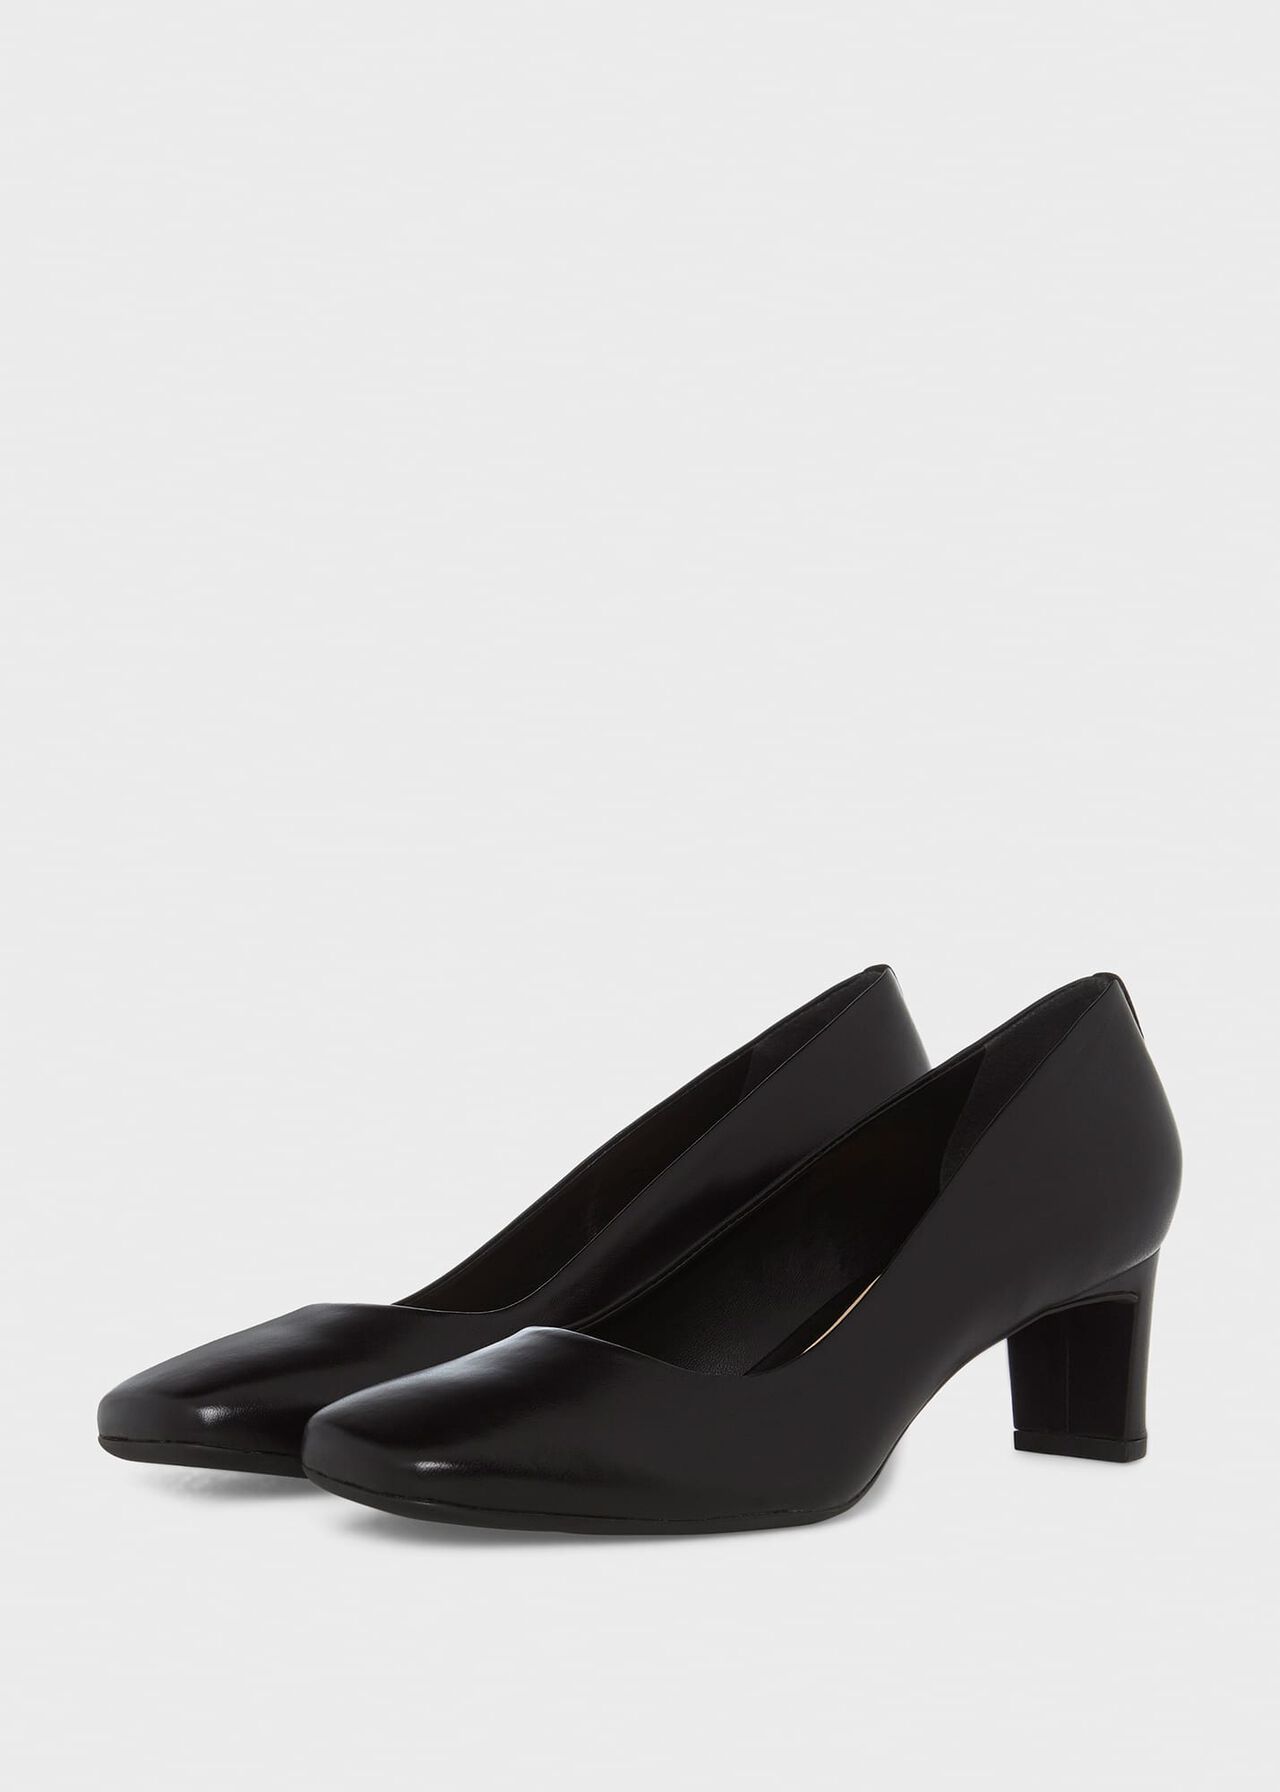 Myra Court Shoes, Black, hi-res